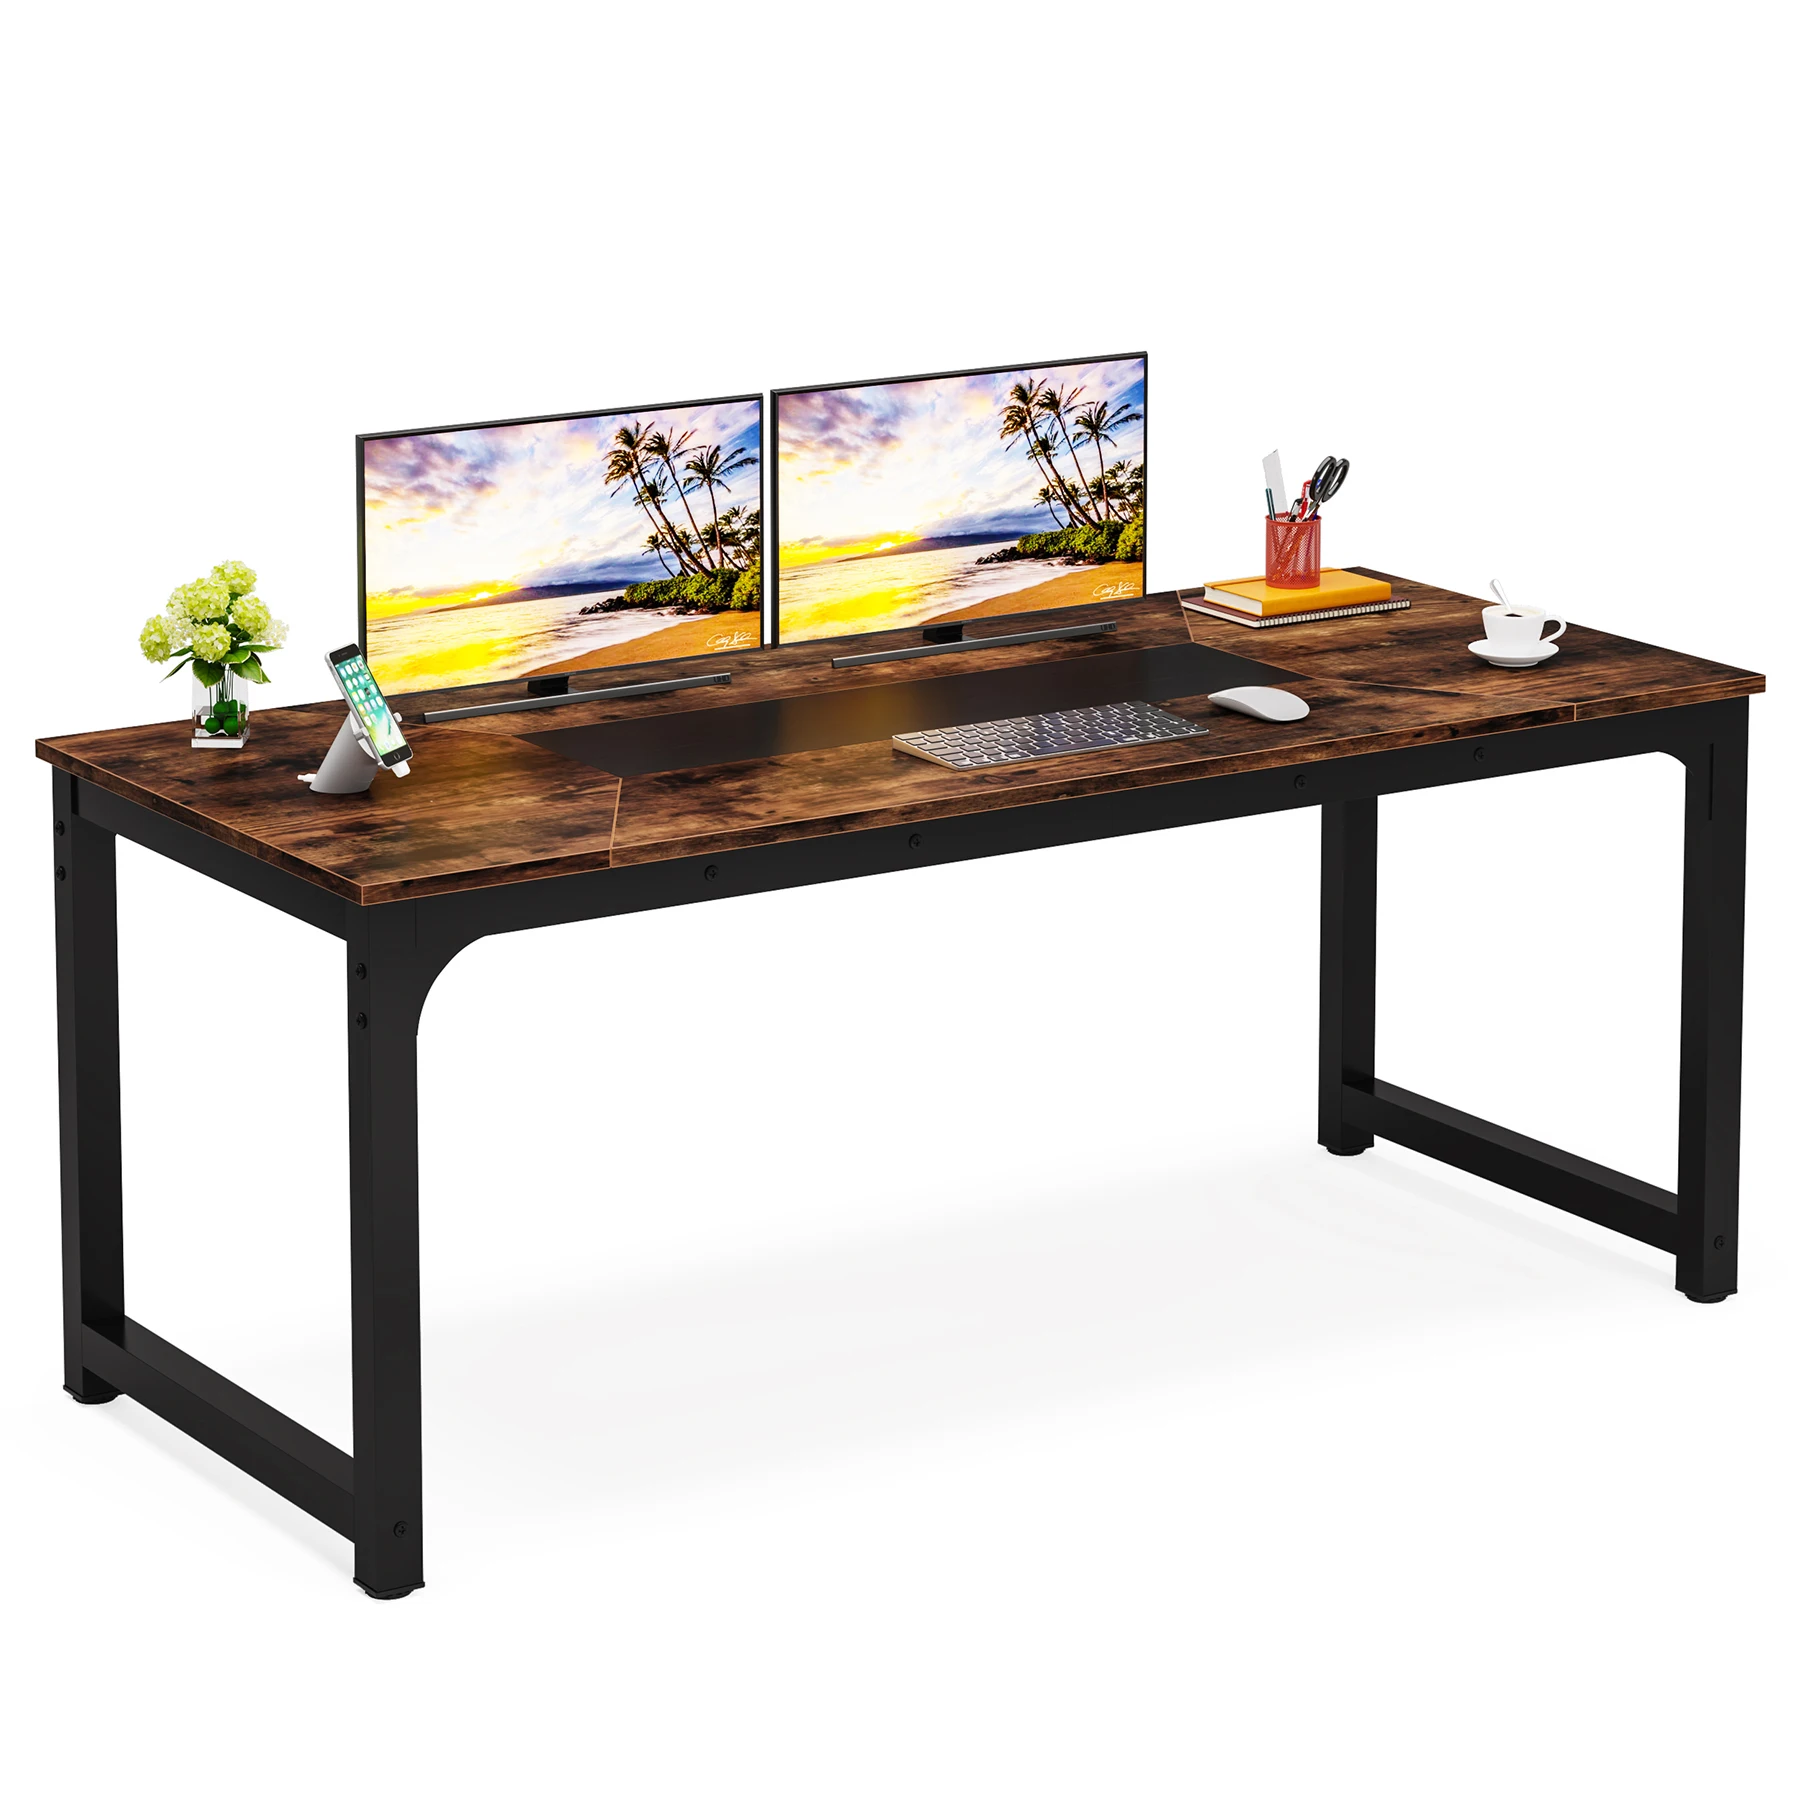 Unique Rectangular Work Table Office Desk Wooden Computer Table Desk